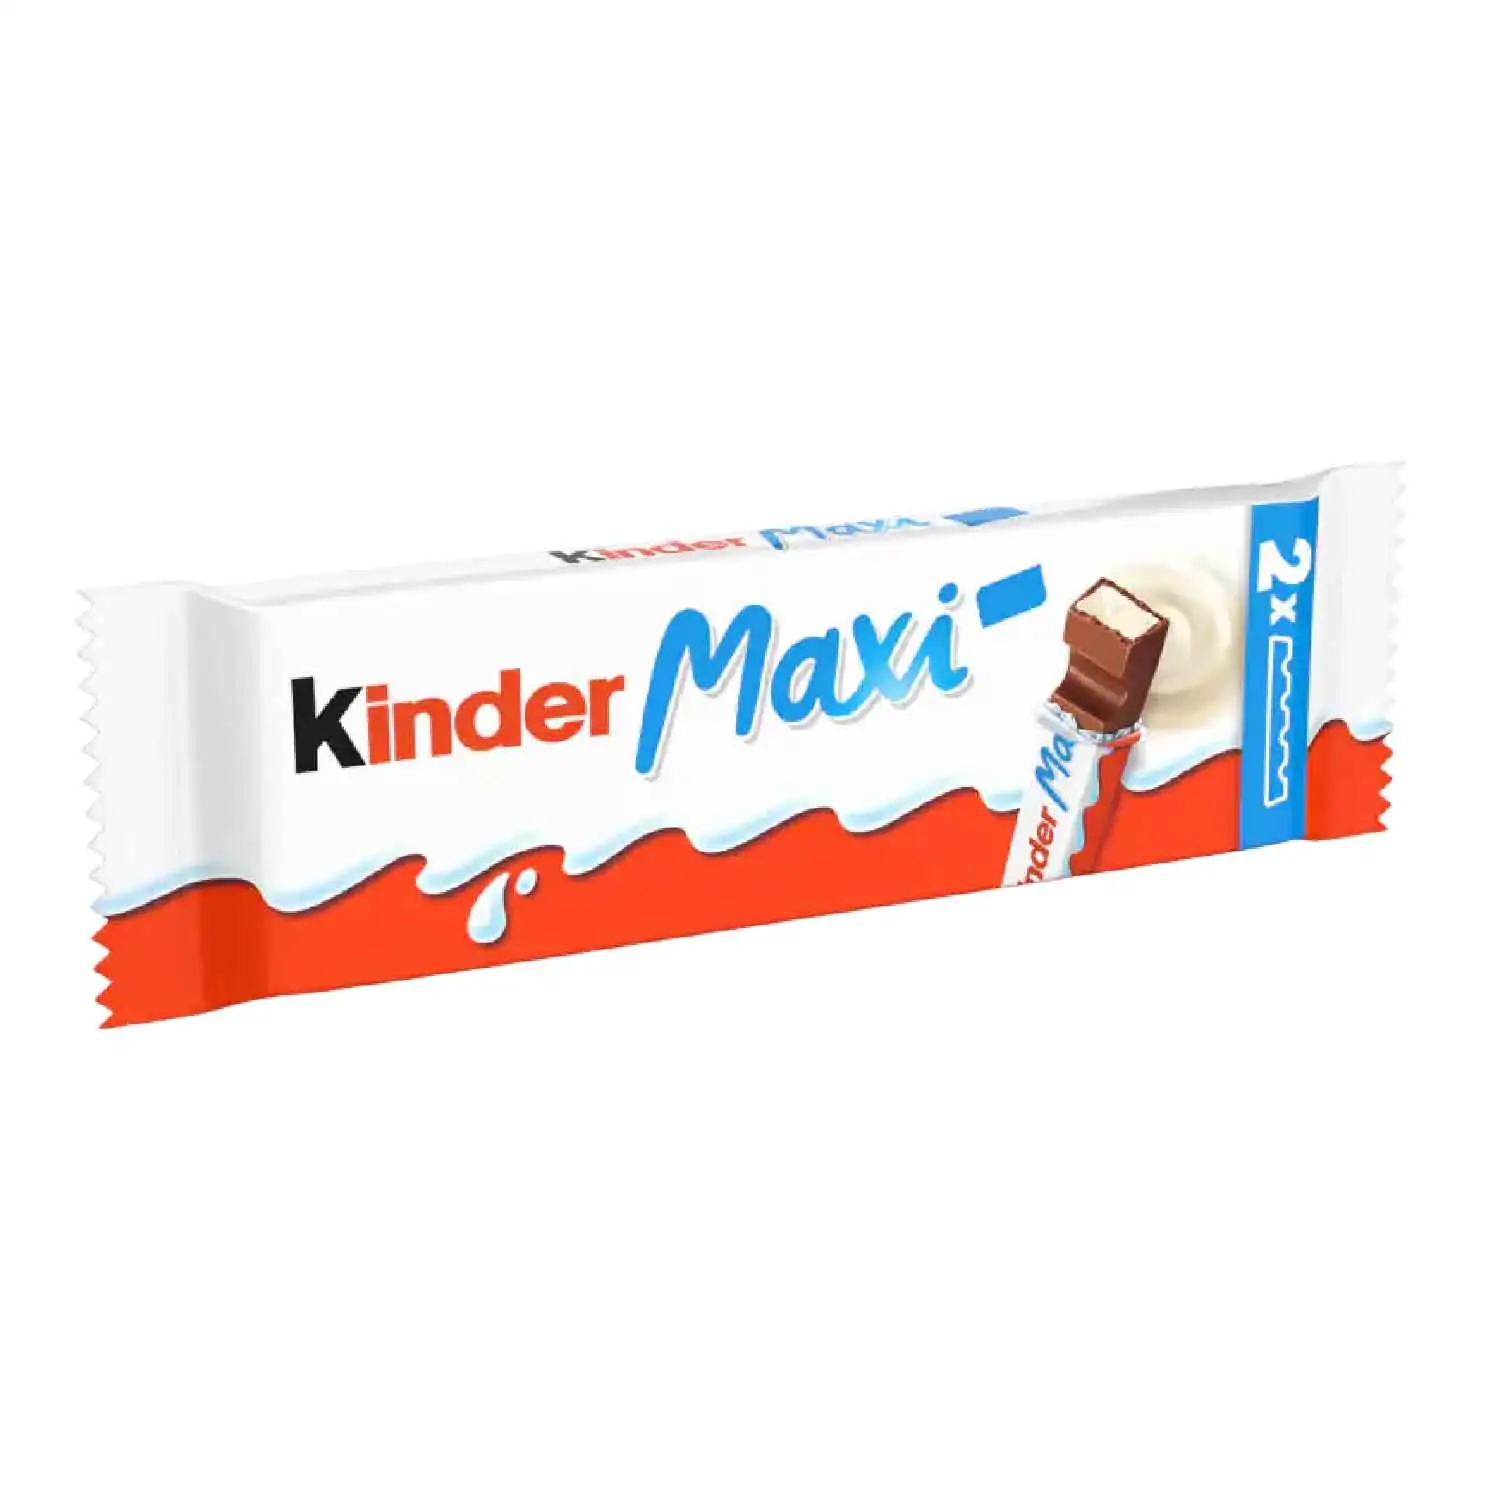 2x Kinder chocolate maxi 21g